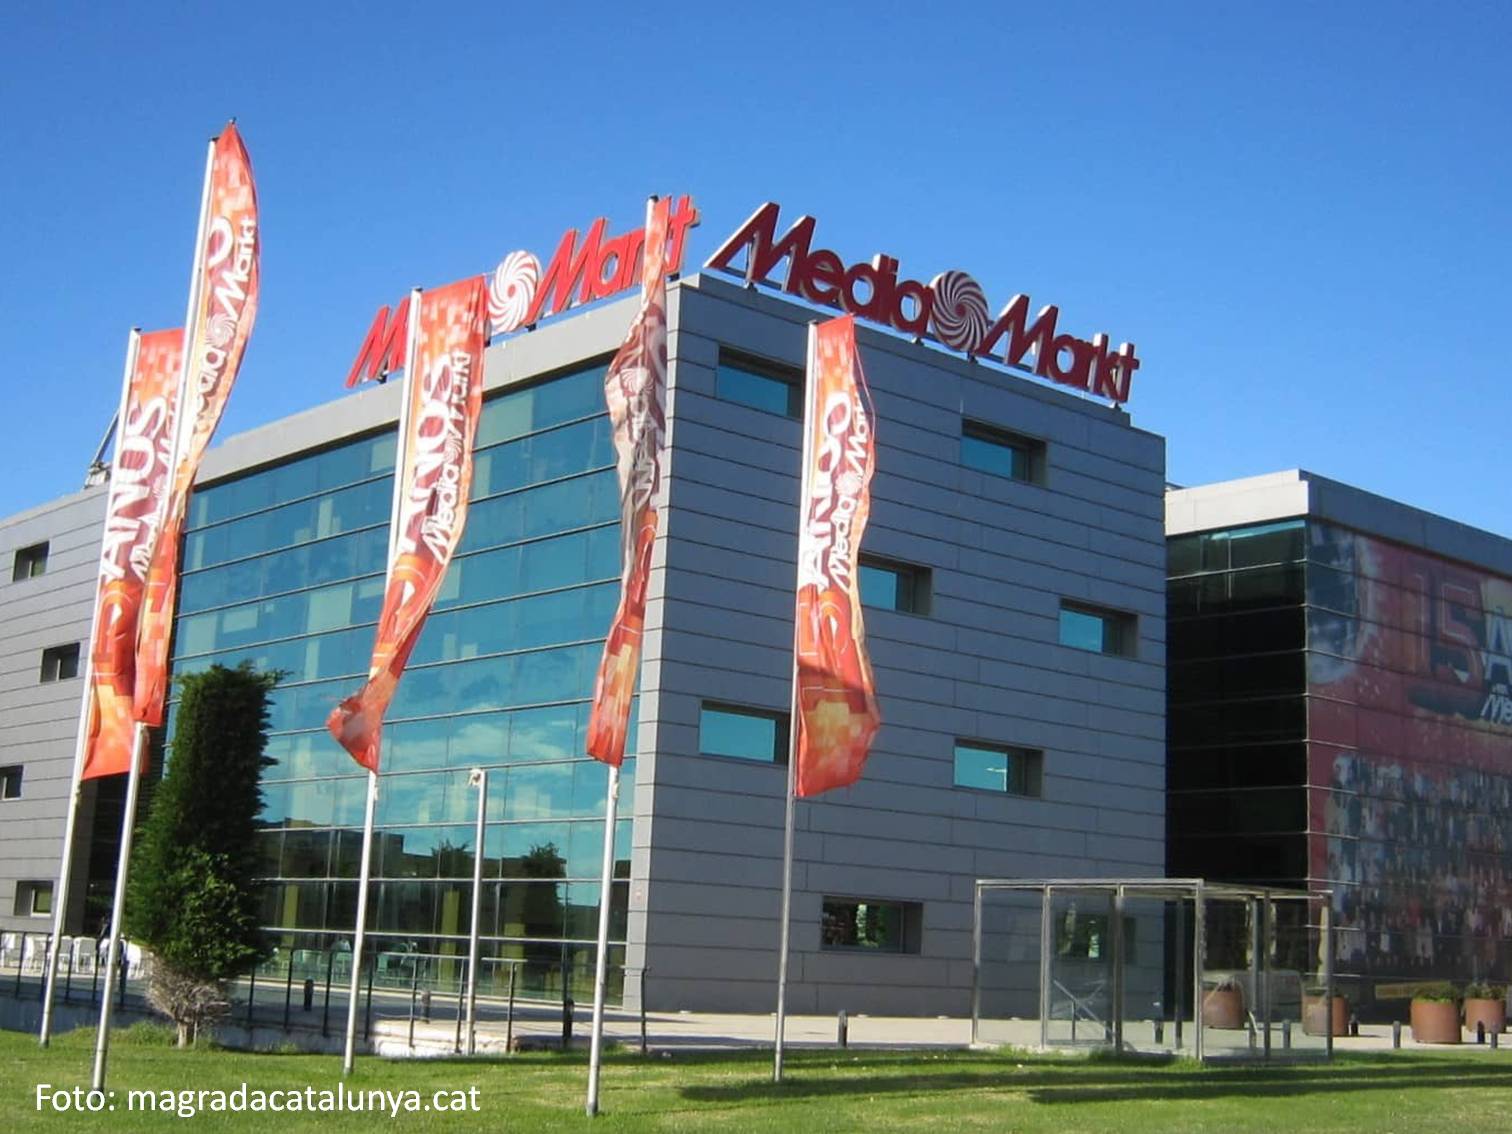 MediaMarkt-Iberia opens its first TechVillage store in Madrid